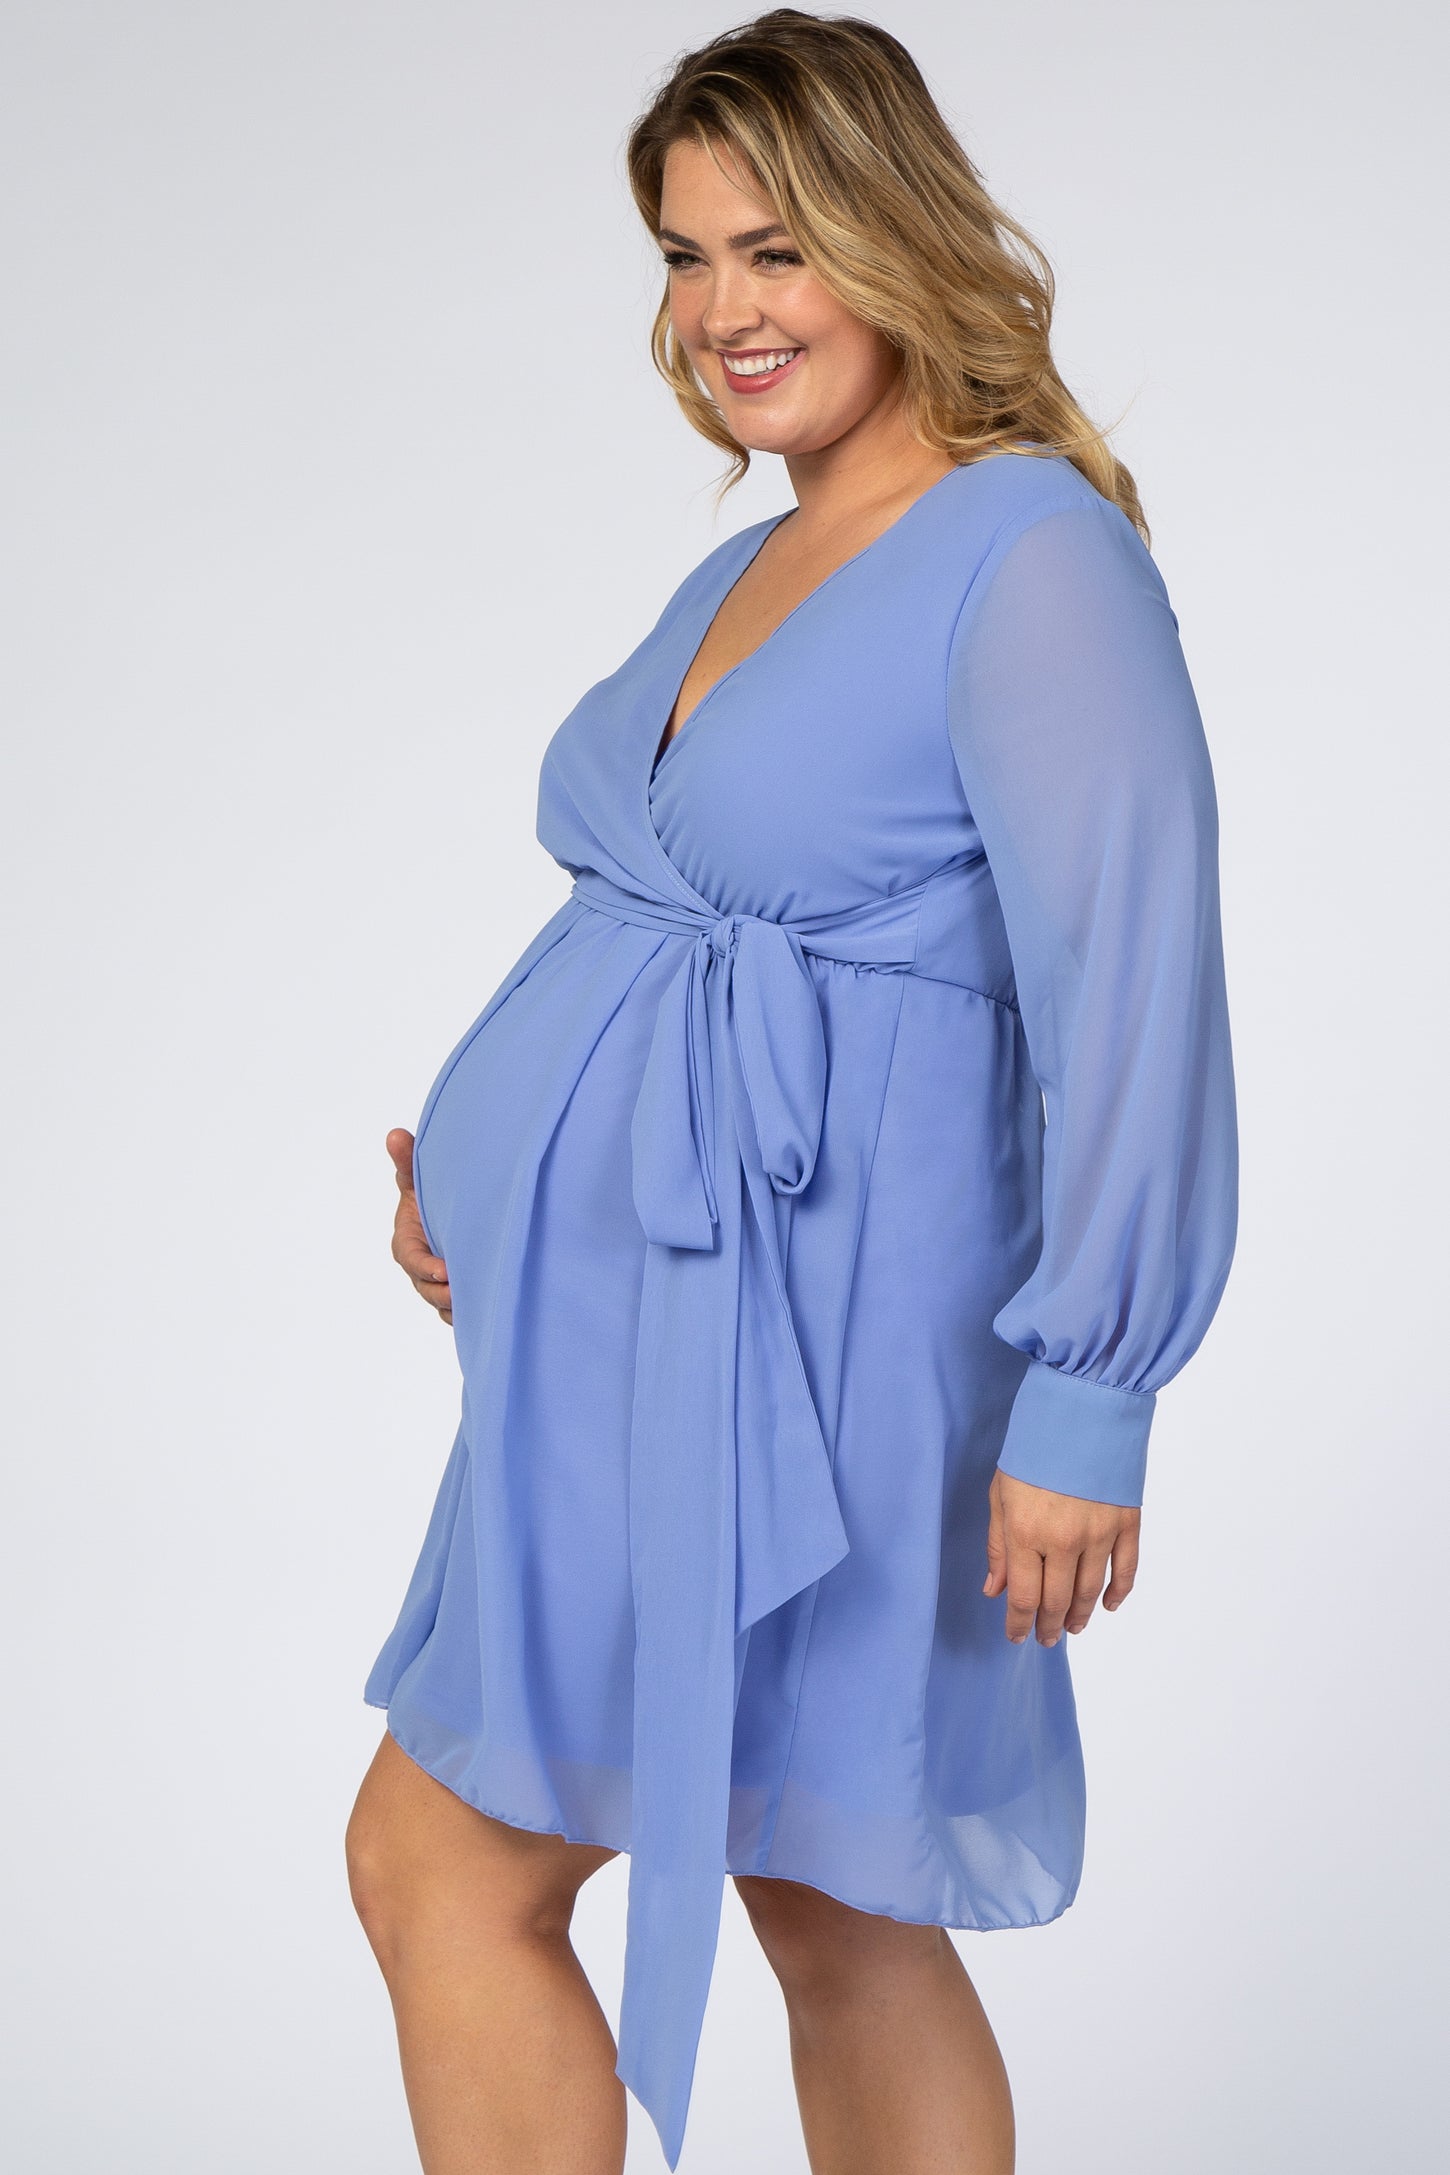 Periwinkle Chiffon Plus Maternity Wrap Dress